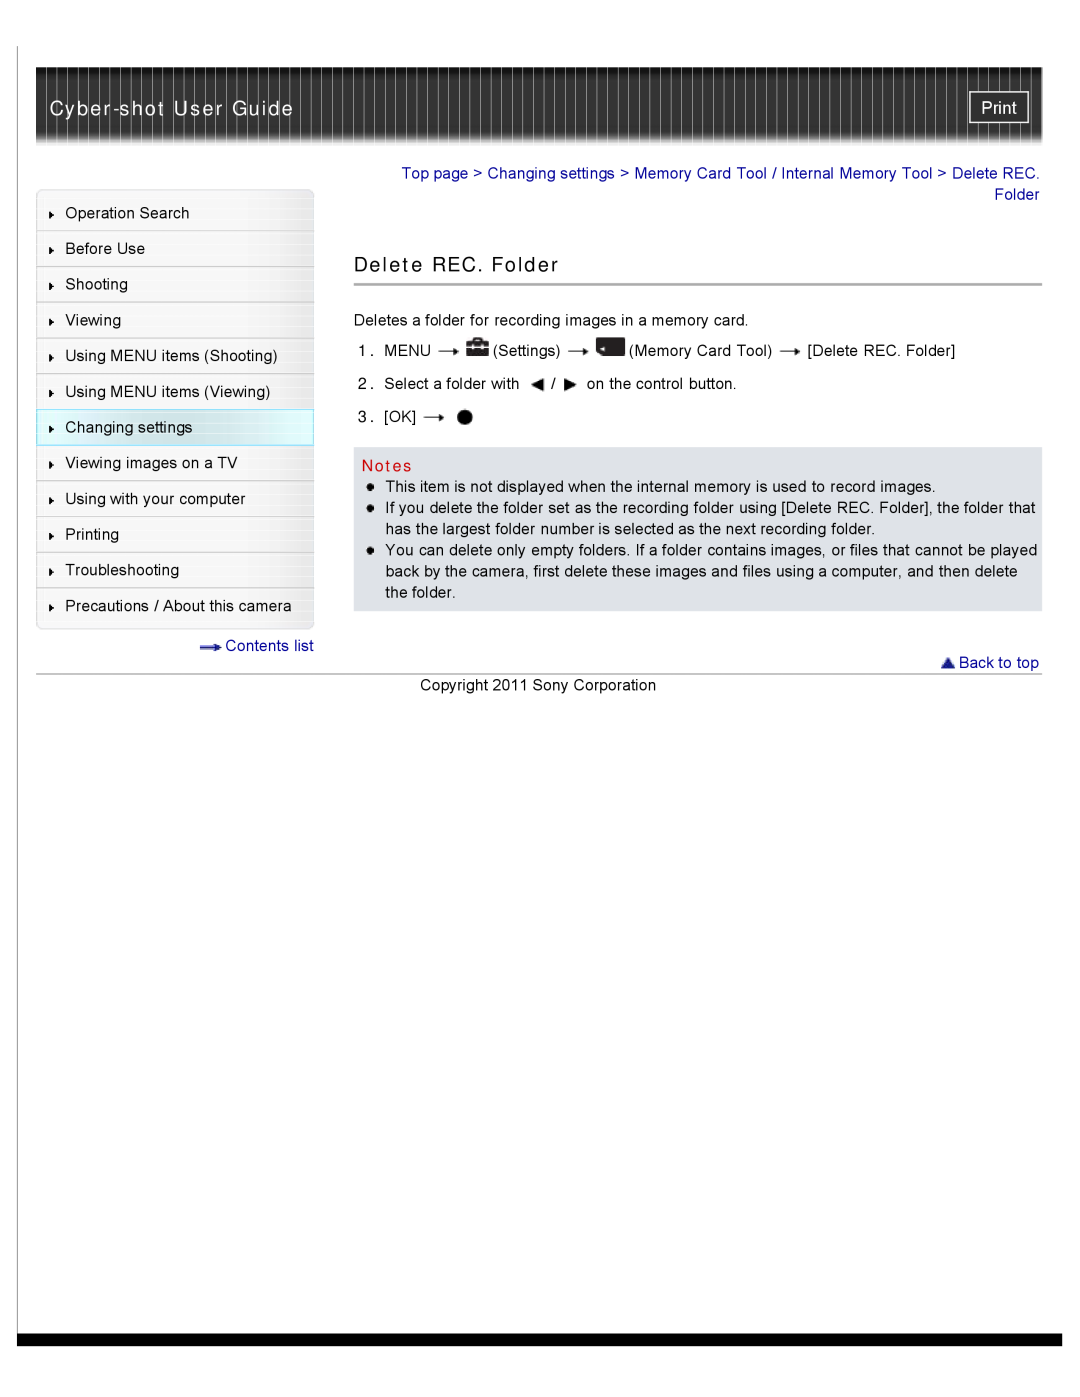 Sony DSC-W510 manual Delete REC. Folder, Cyber-shot User Guide, Print, Contents list Back to top 